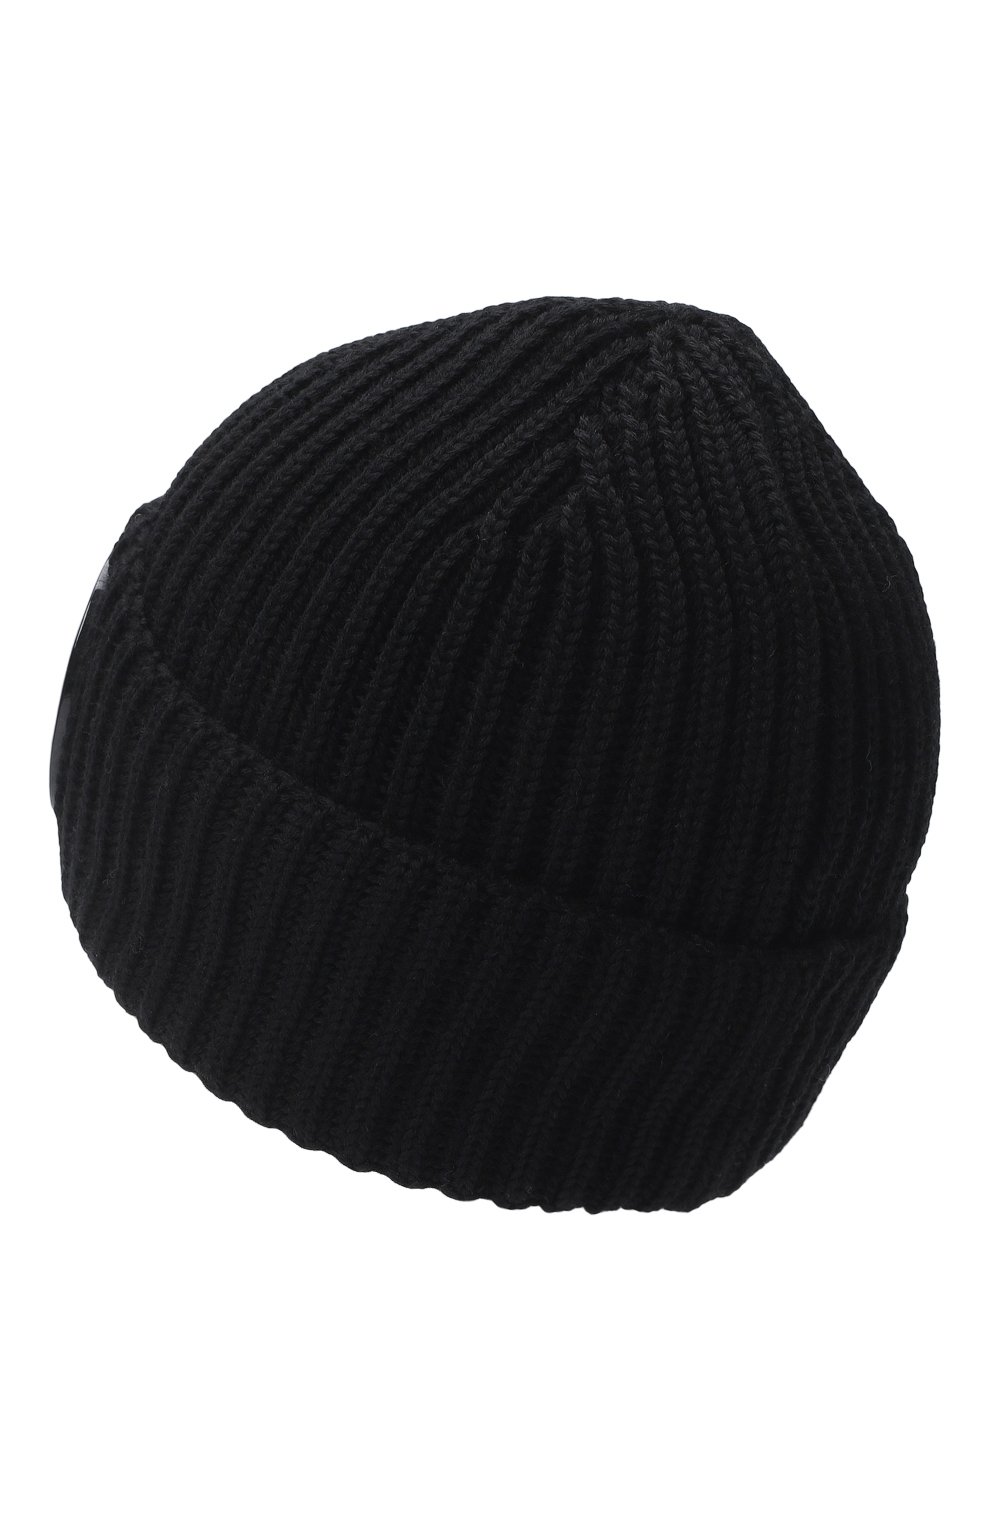 Шерстяная шапка | CP Company | Чёрный - 2